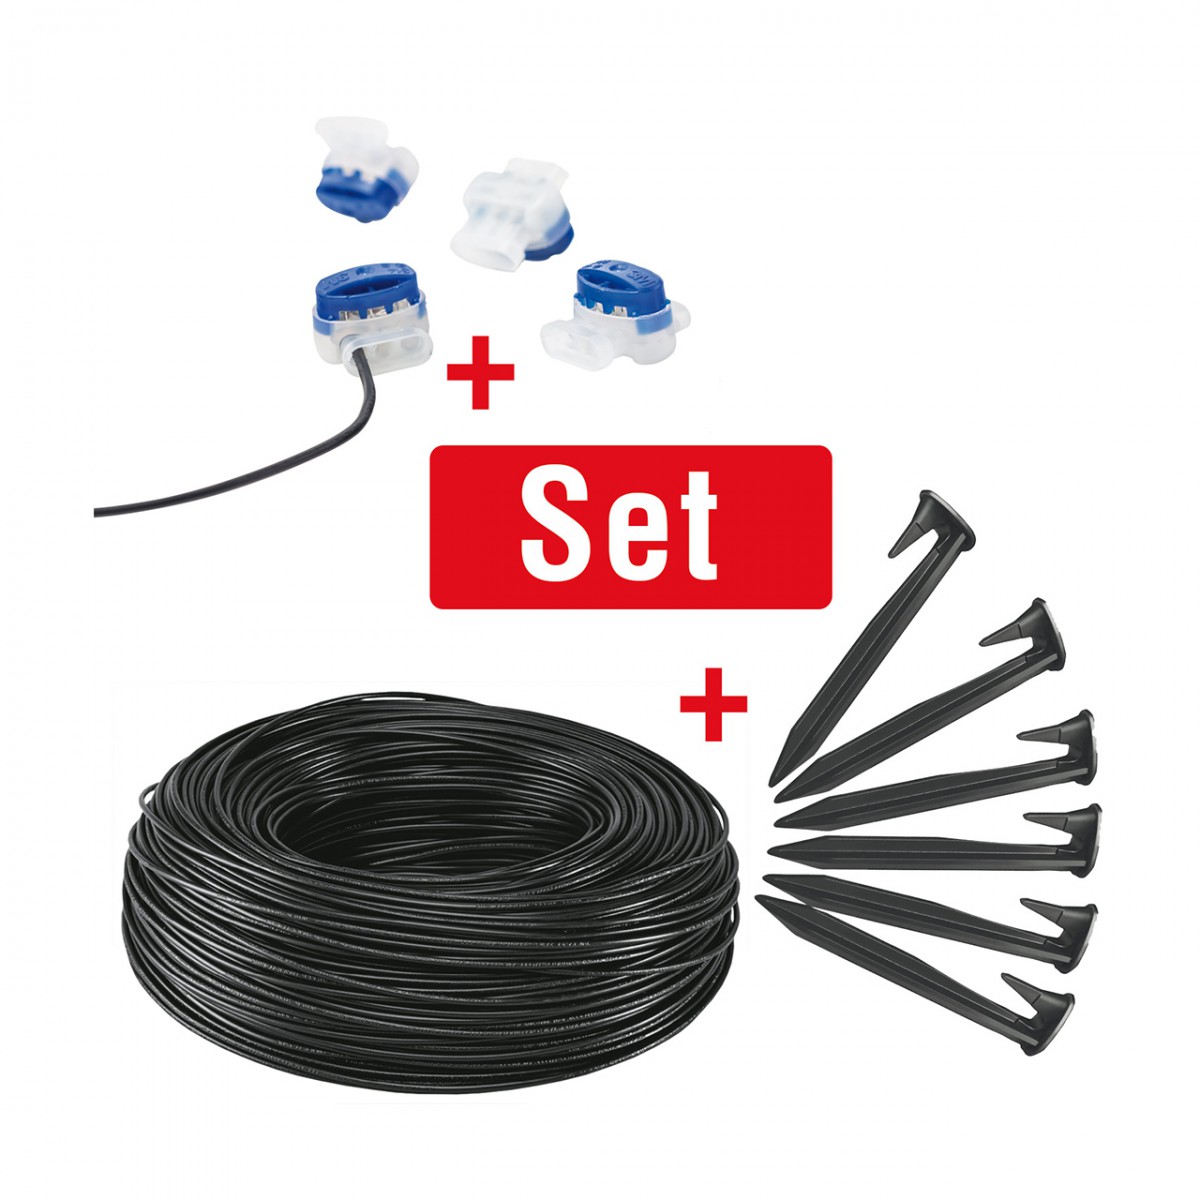 Signal cable Robolinho 150M AL-KO Starter kit